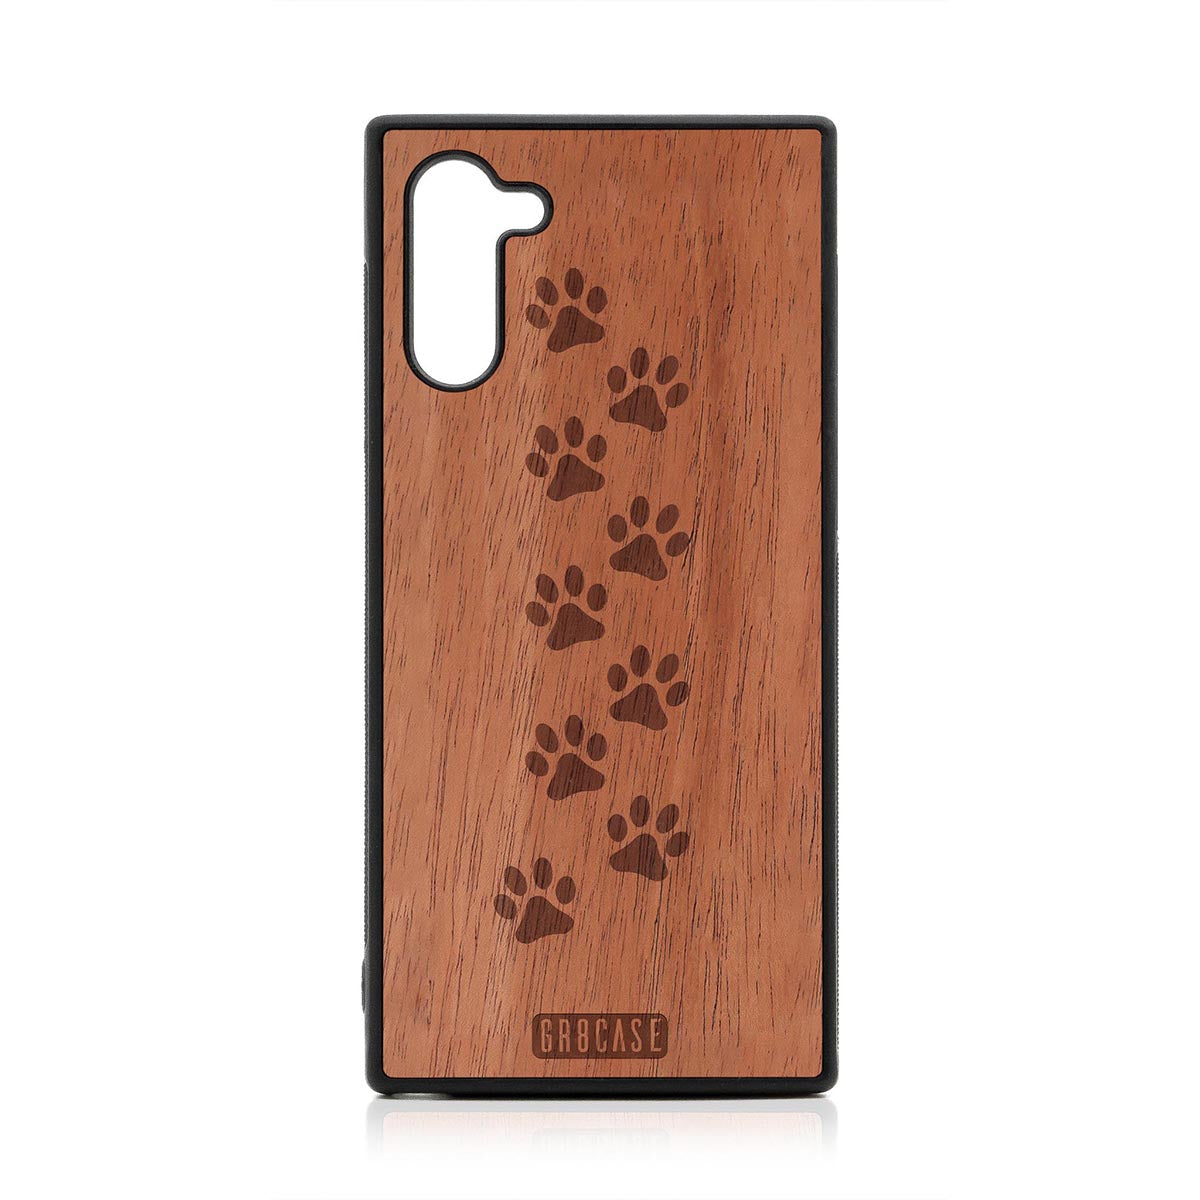 Paw Prints Design Wood Case Samsung Galaxy Note 10 by GR8CASE